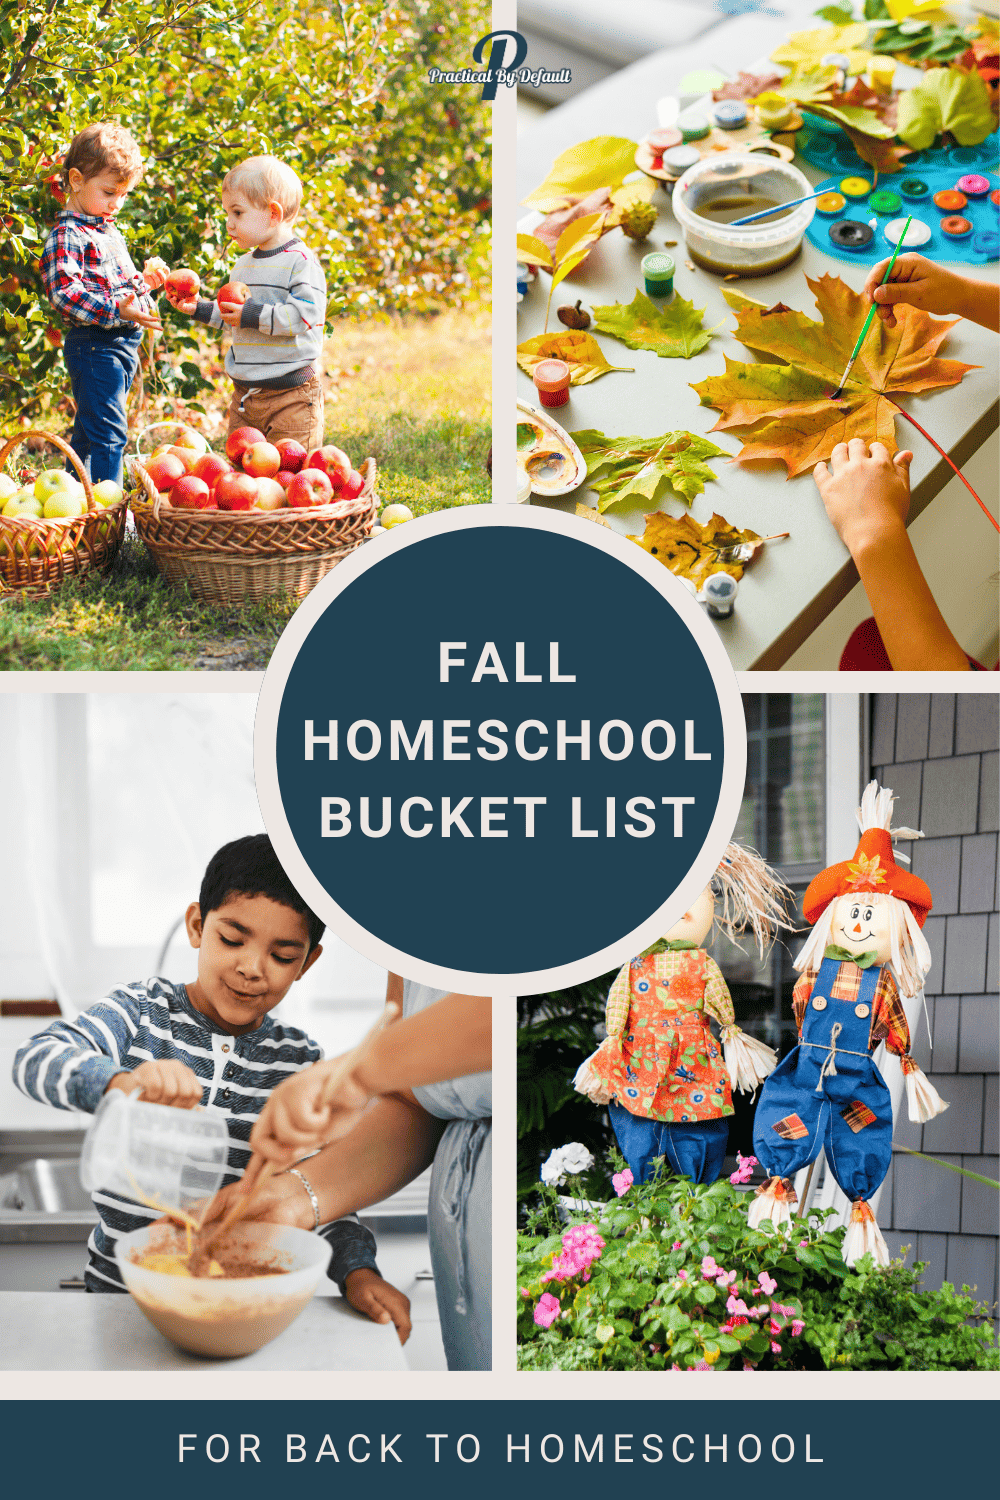 Fall Homeschool Bucket List: Simplify Back to Homeschool